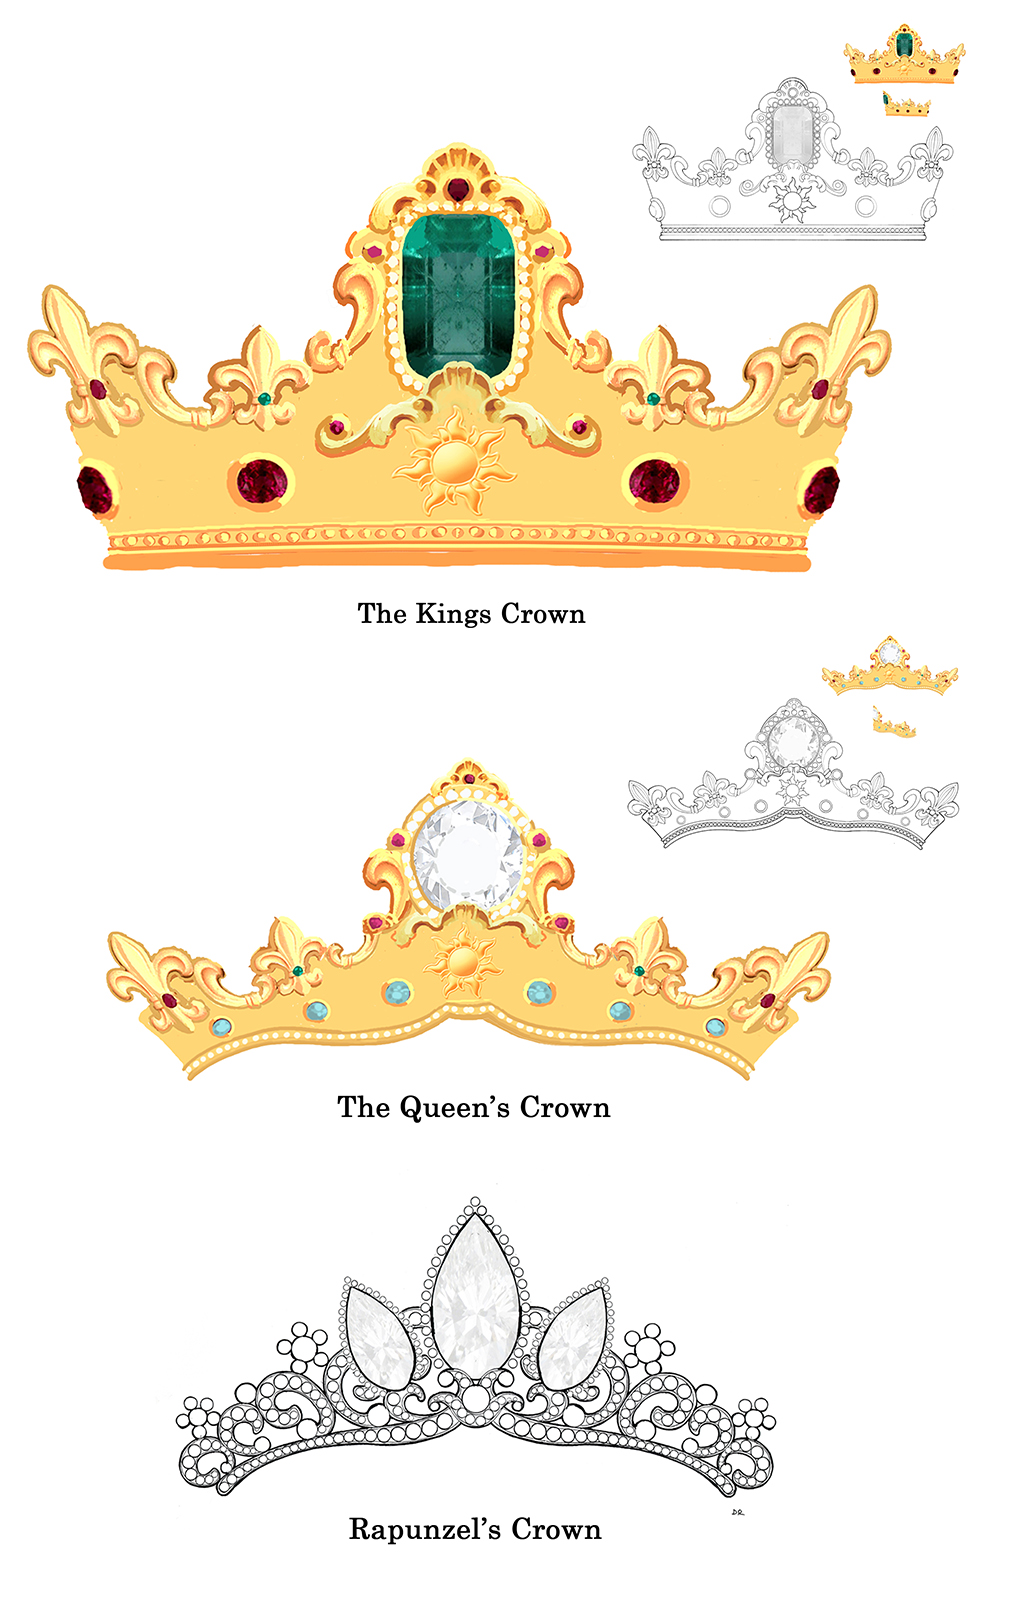 Crown illustrations